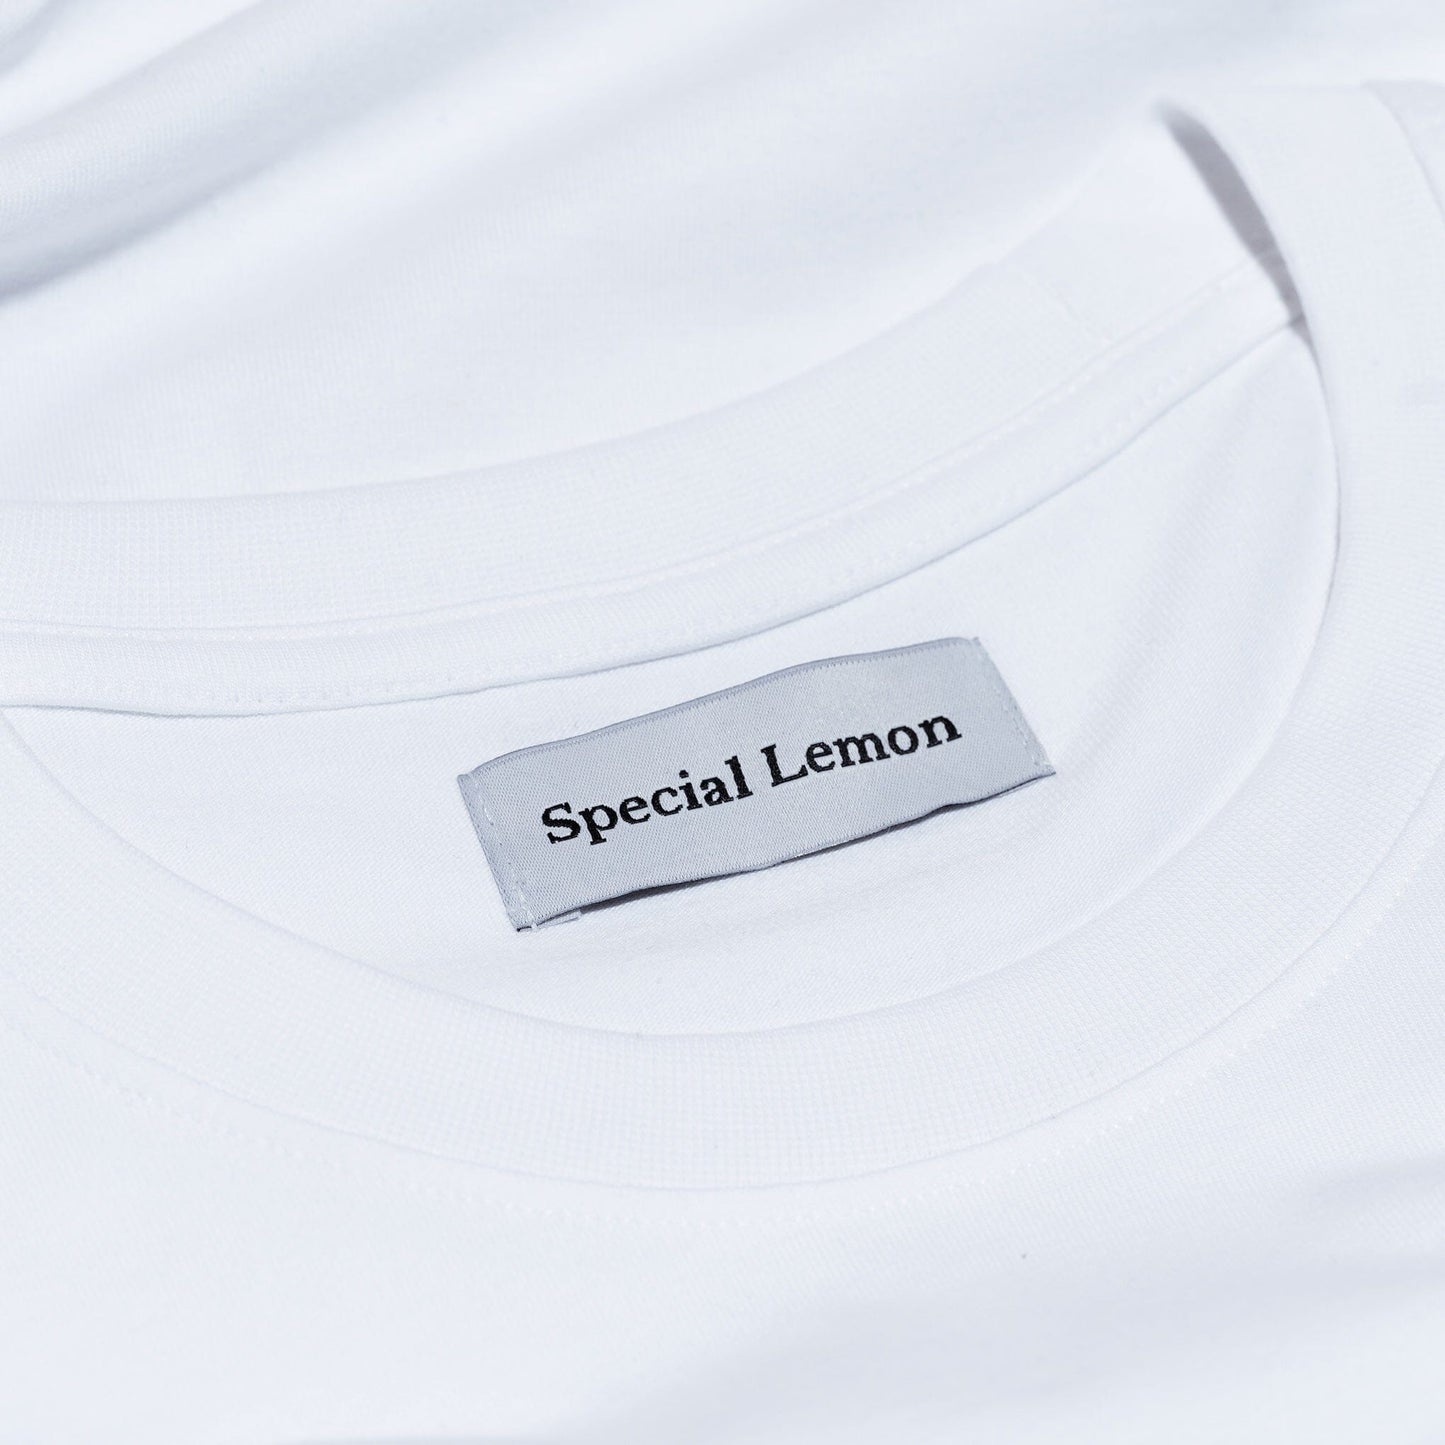 Special Lemon Longsleeve - White Longsleeve Special Lemon 